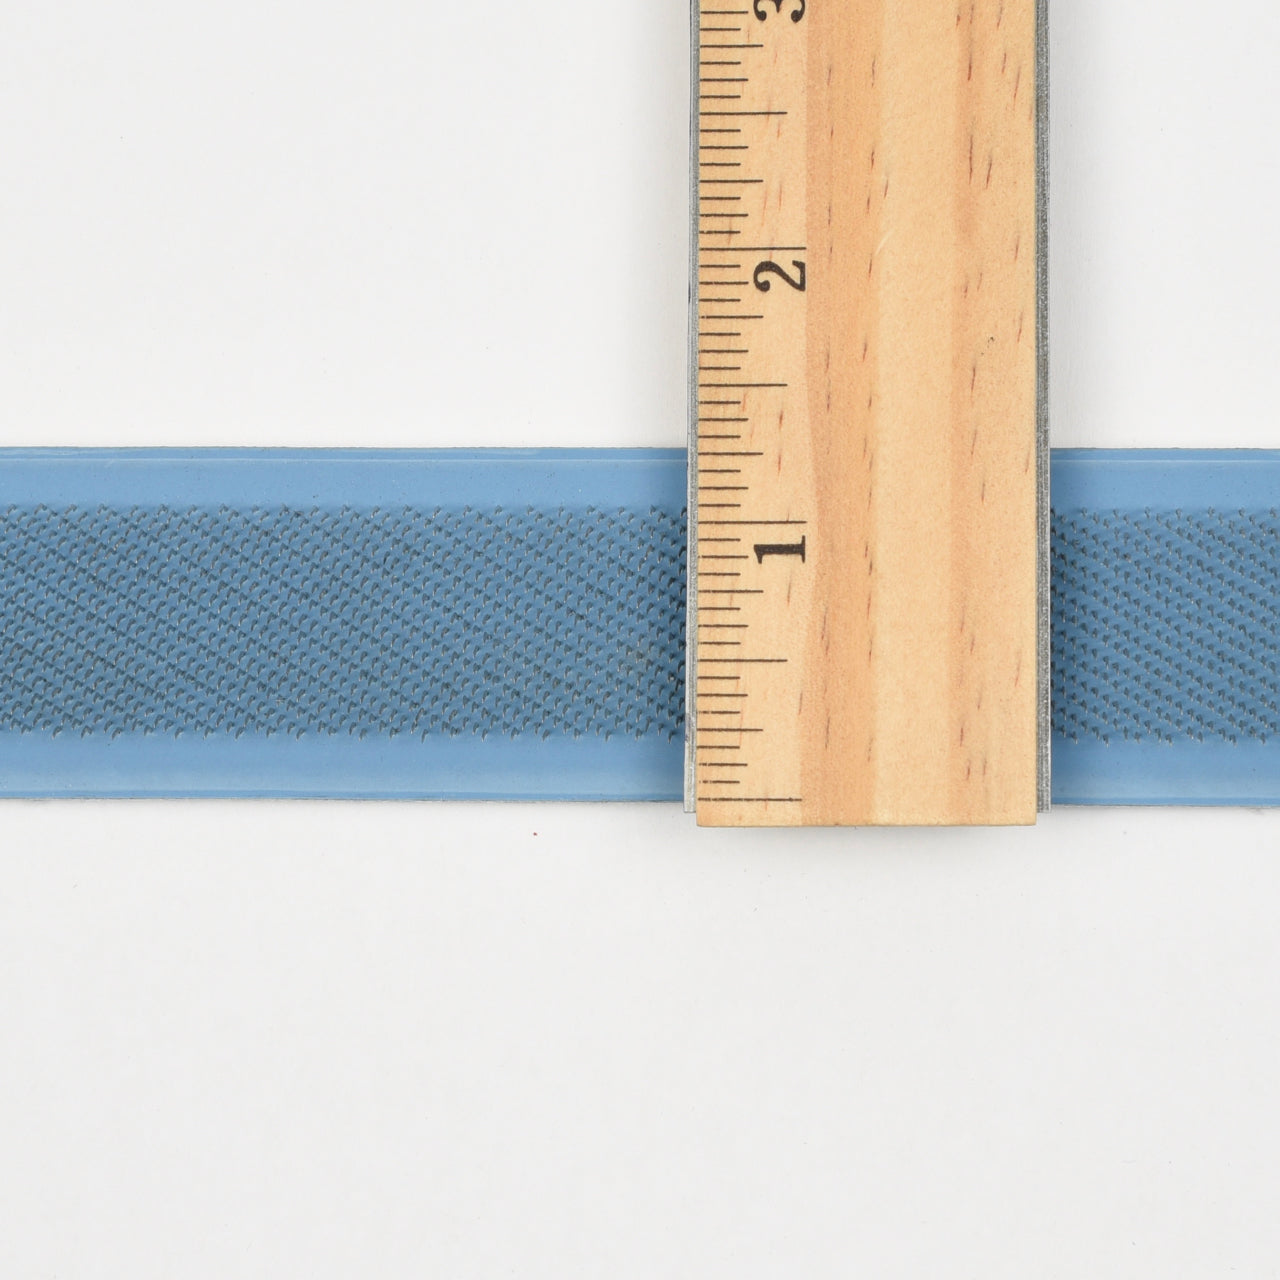 39 In1 Yard100cm Carpet Strip for Frame Handmake Gripper Gripper for Rug  Hooking gifts 2 Saw Blades 